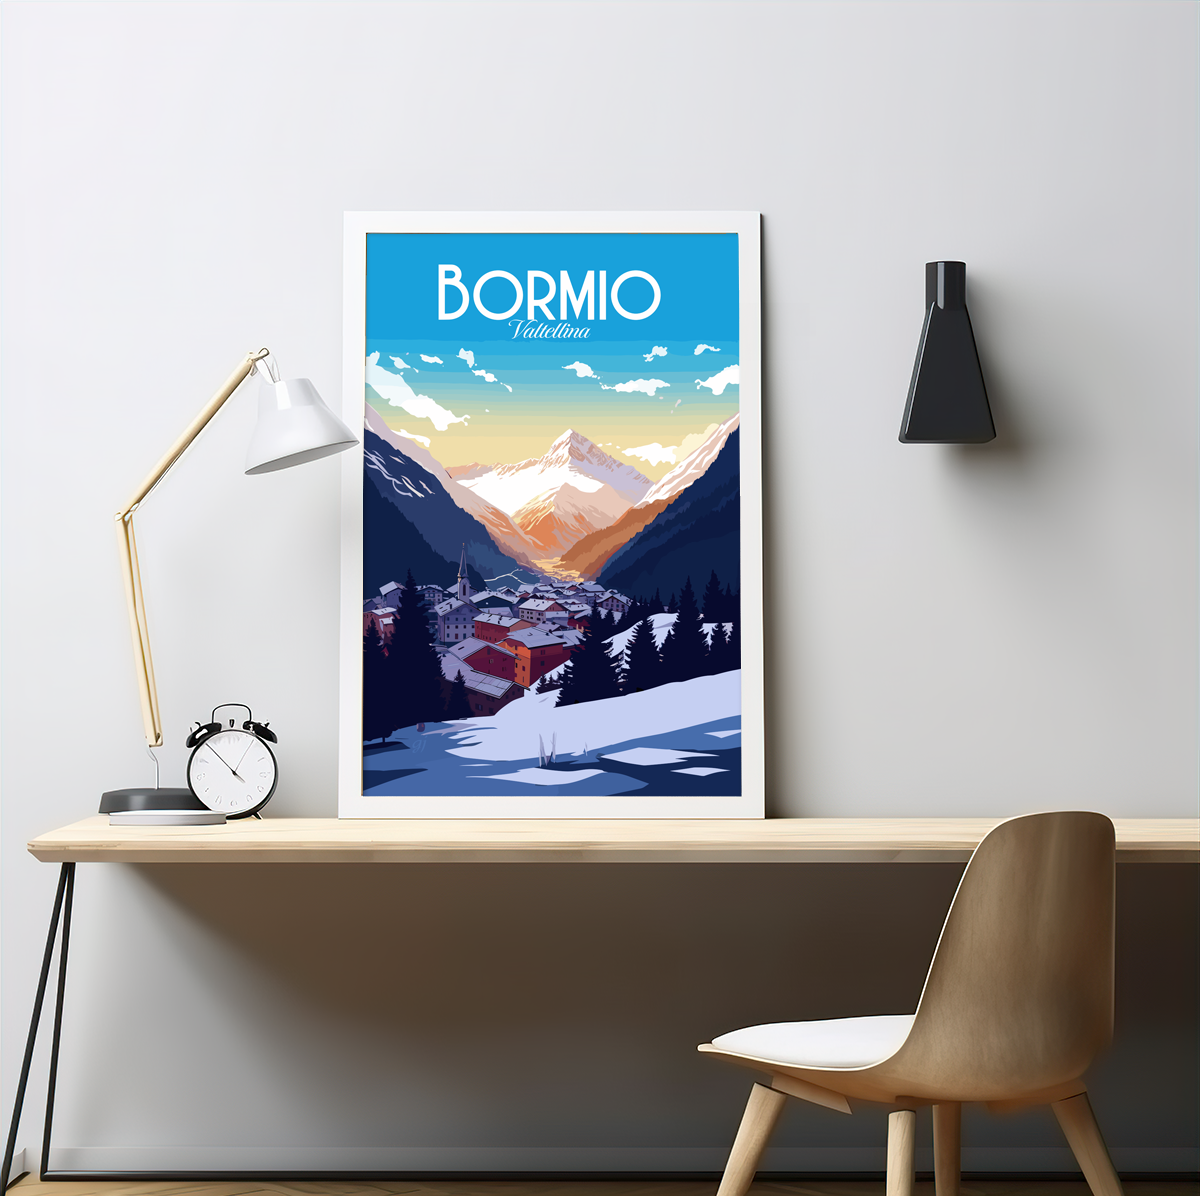 Bormio poster by bon voyage design